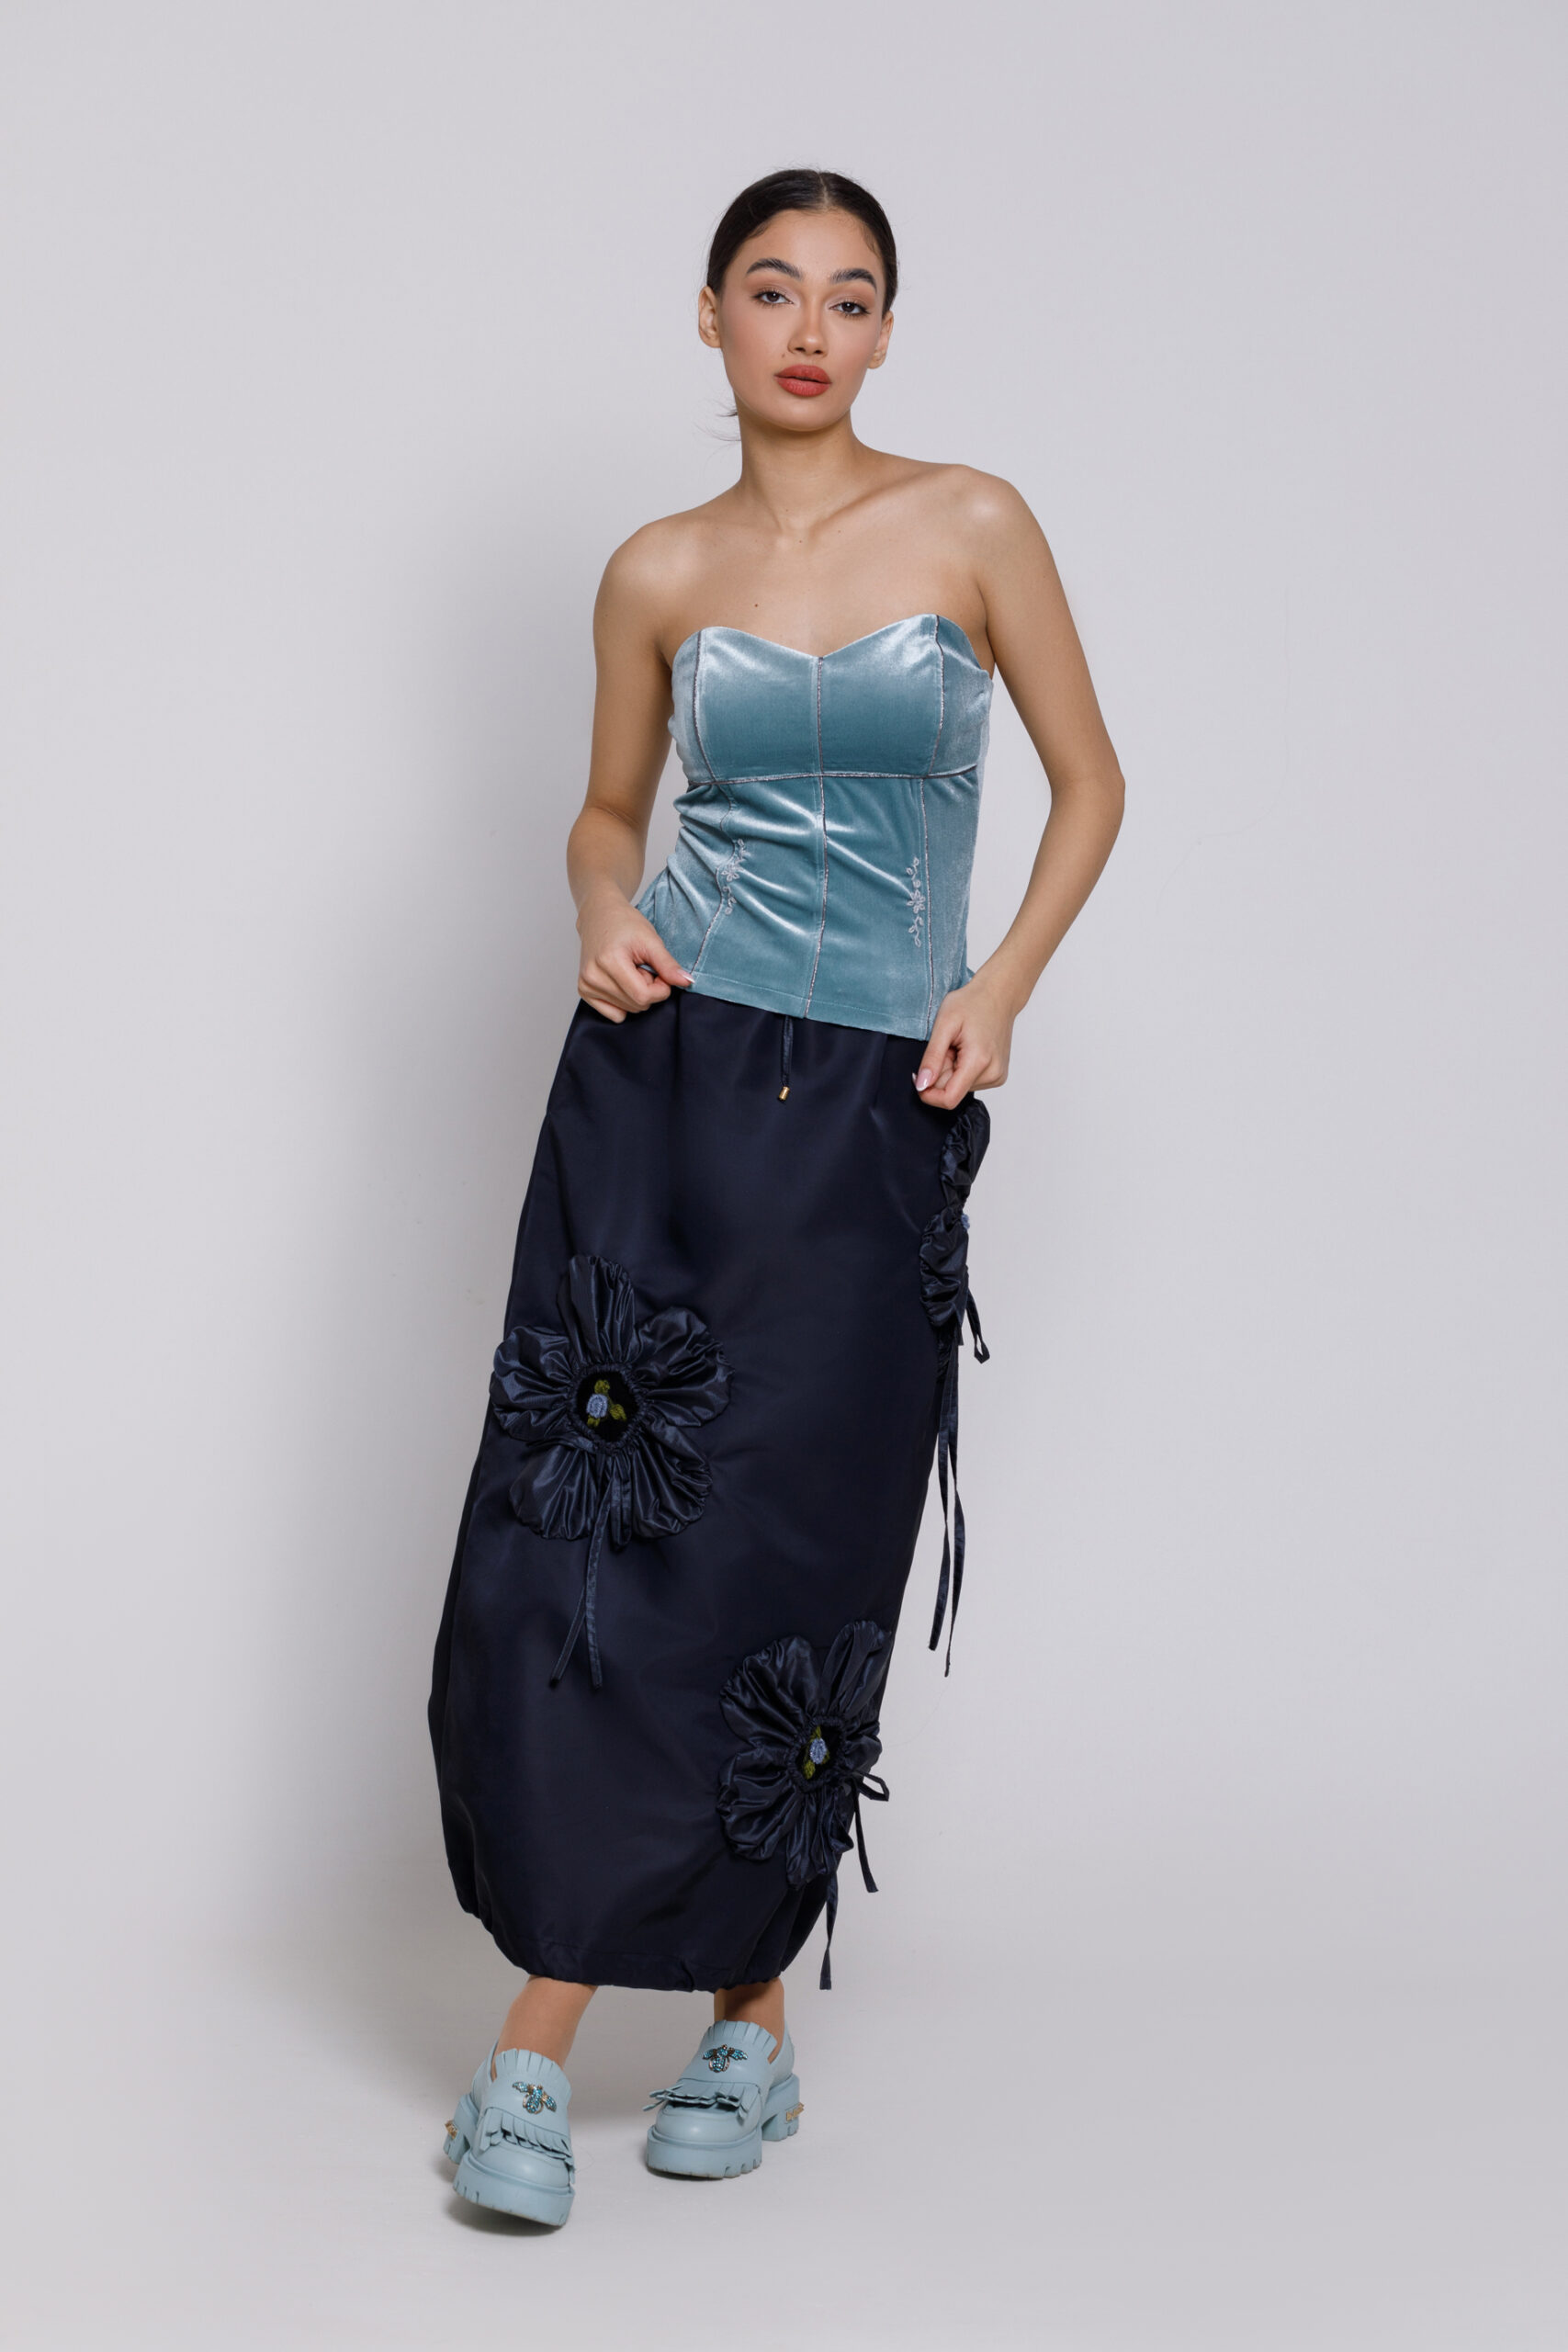 FLORY Navy blue skirt with volumetric flowers. Natural fabrics, original design, handmade embroidery